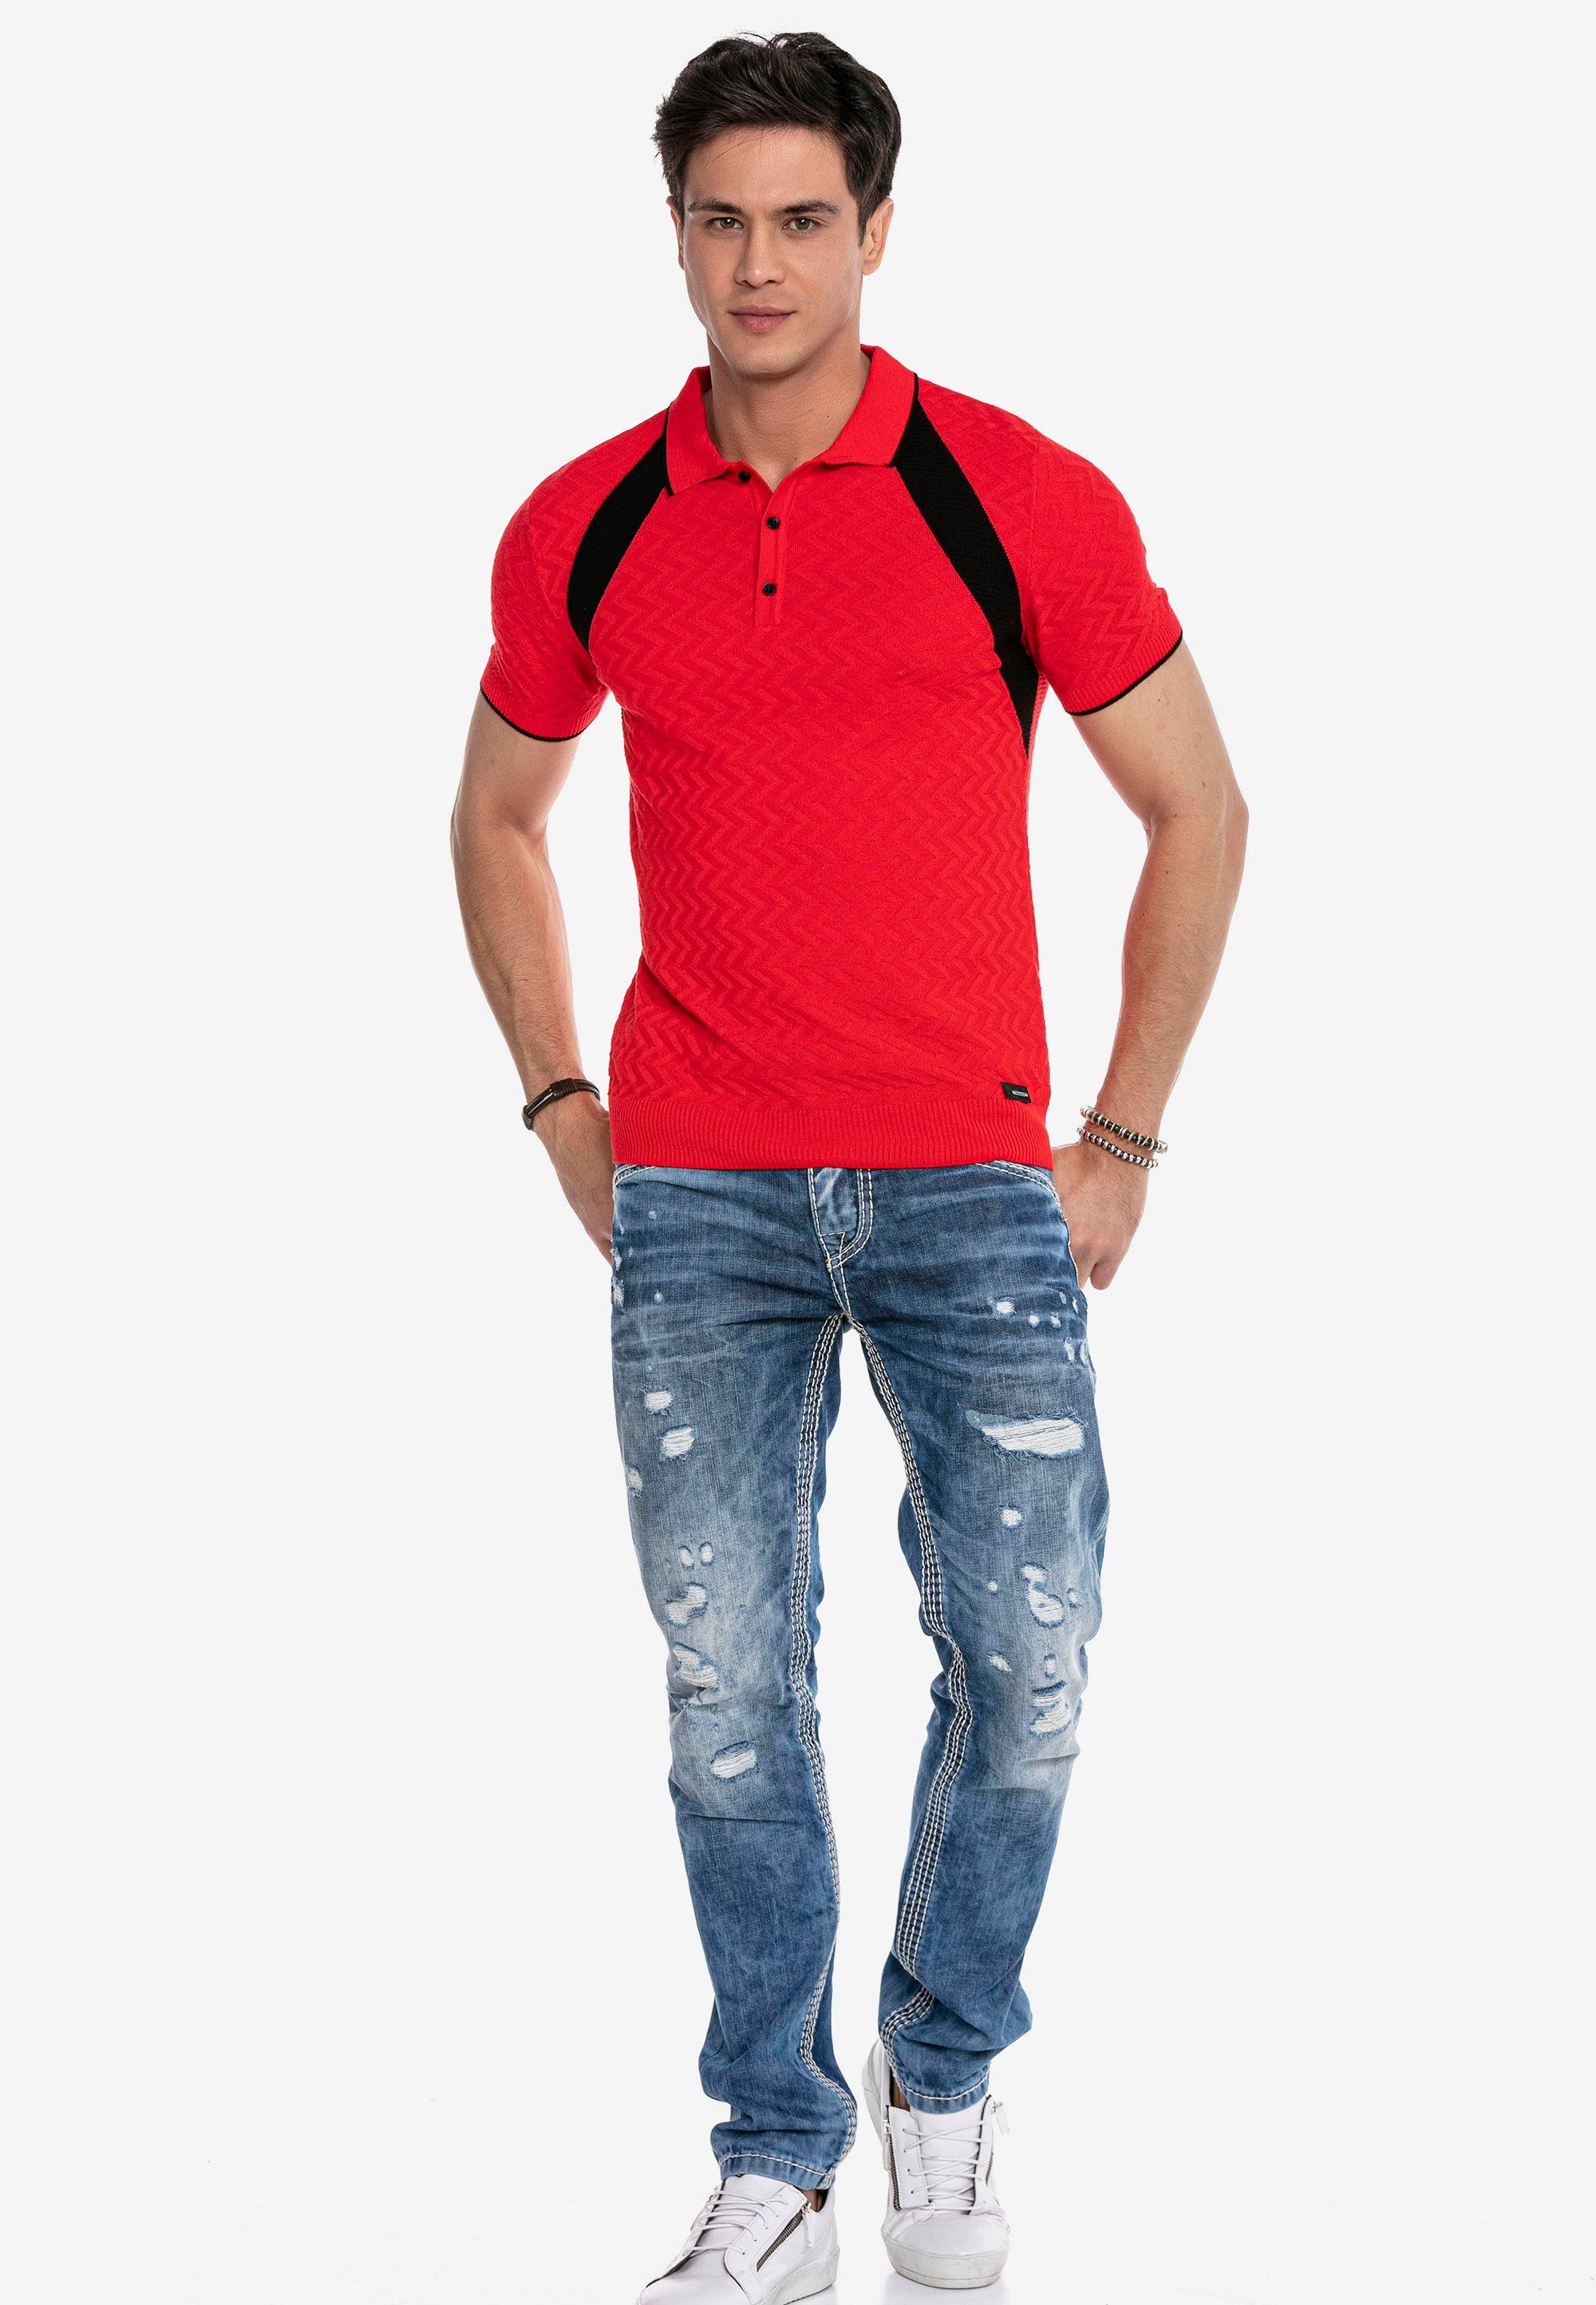 Cipo & Baxx Poloshirt mit Muster rot-schwarz dezentem